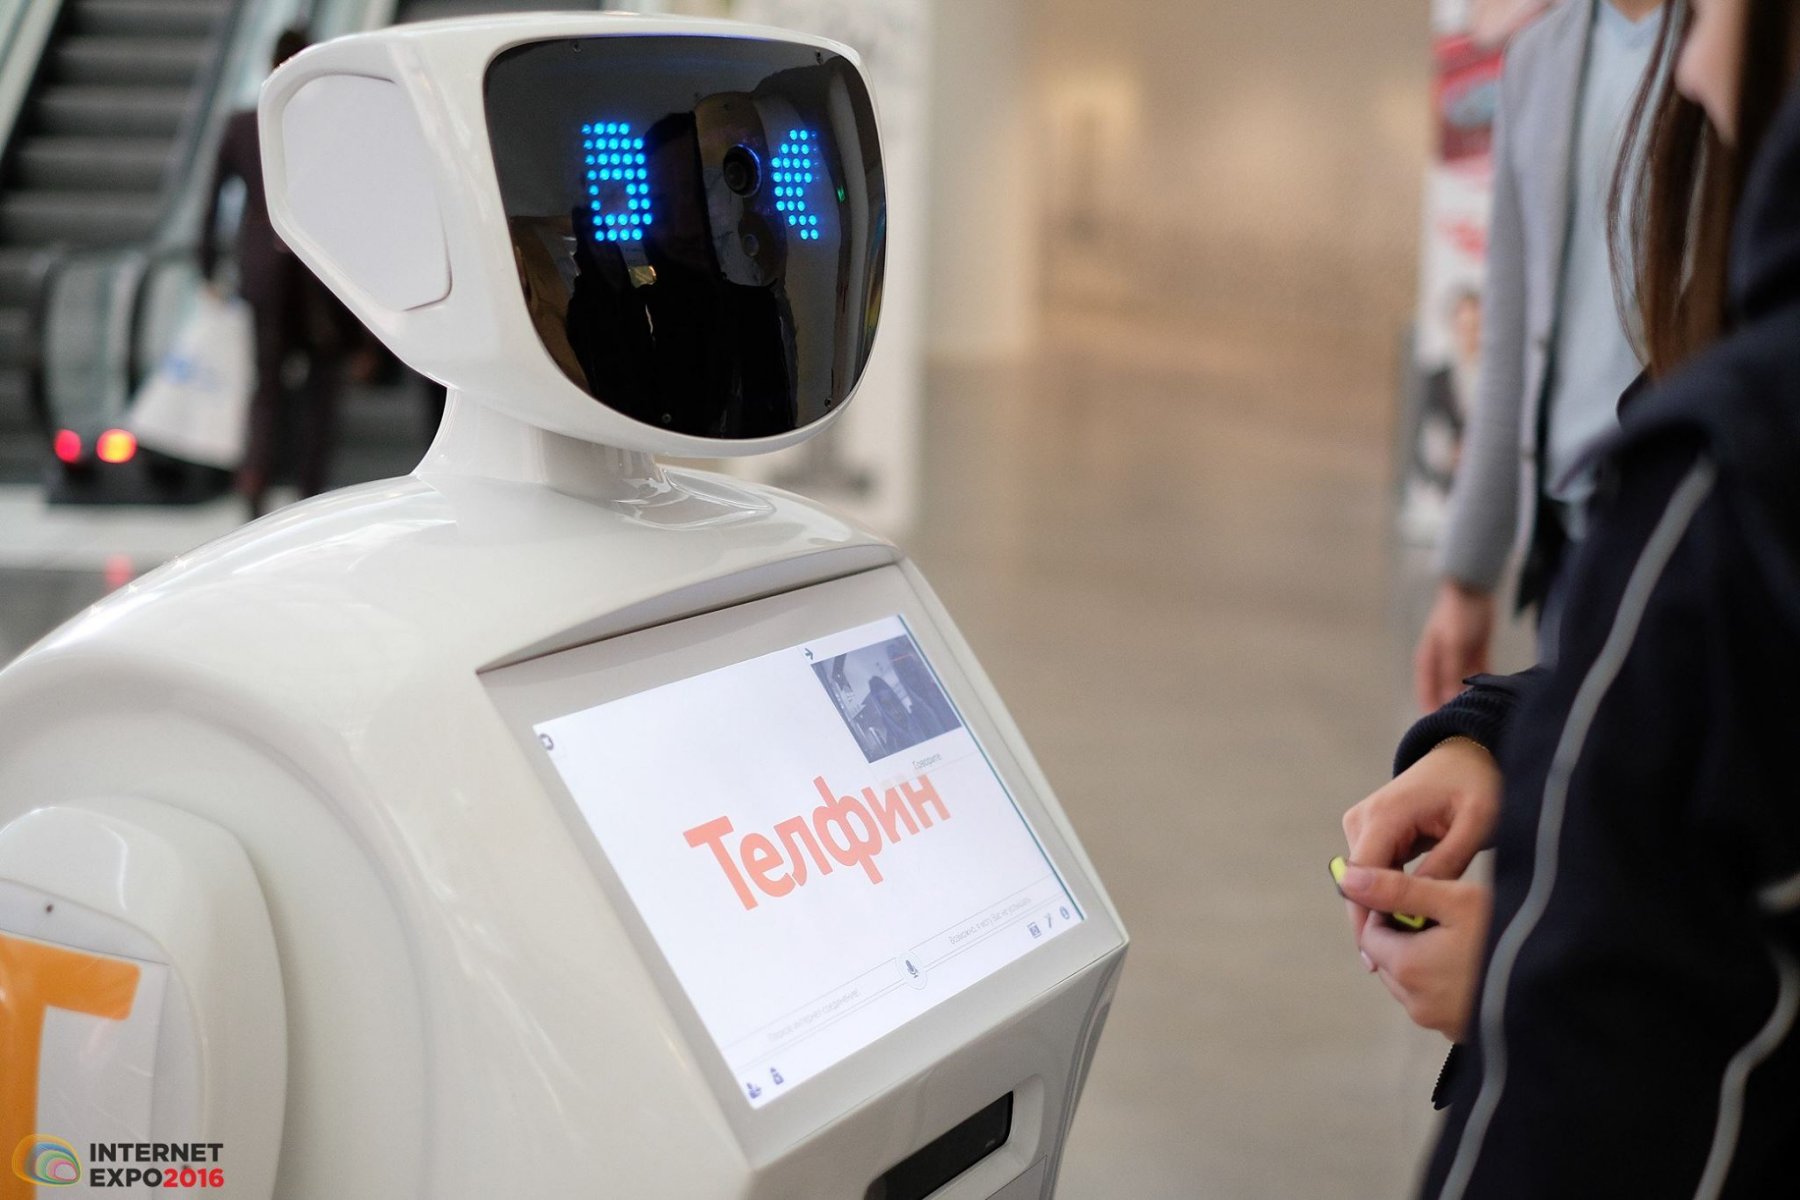 Номер Екатеринбурга за 1 рубль и робот Звоночек: Телфин на Internet Expo 2016